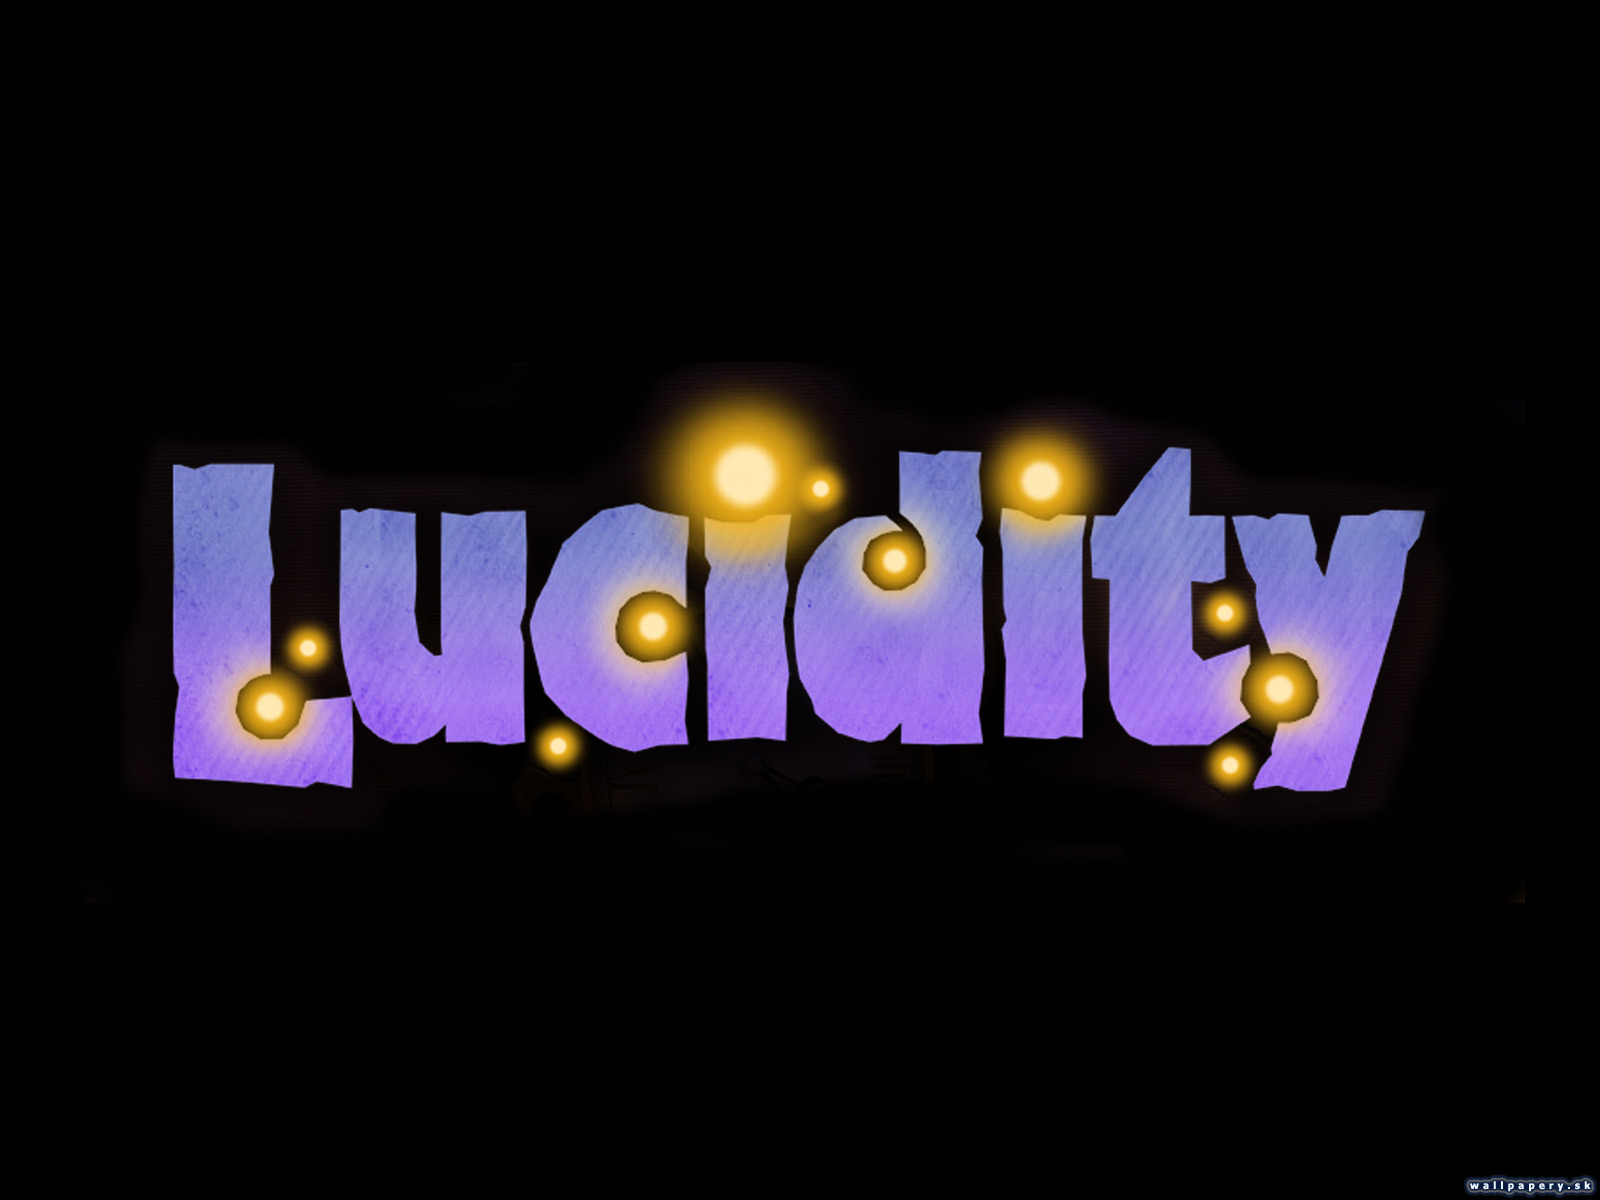 Lucidity - wallpaper 3